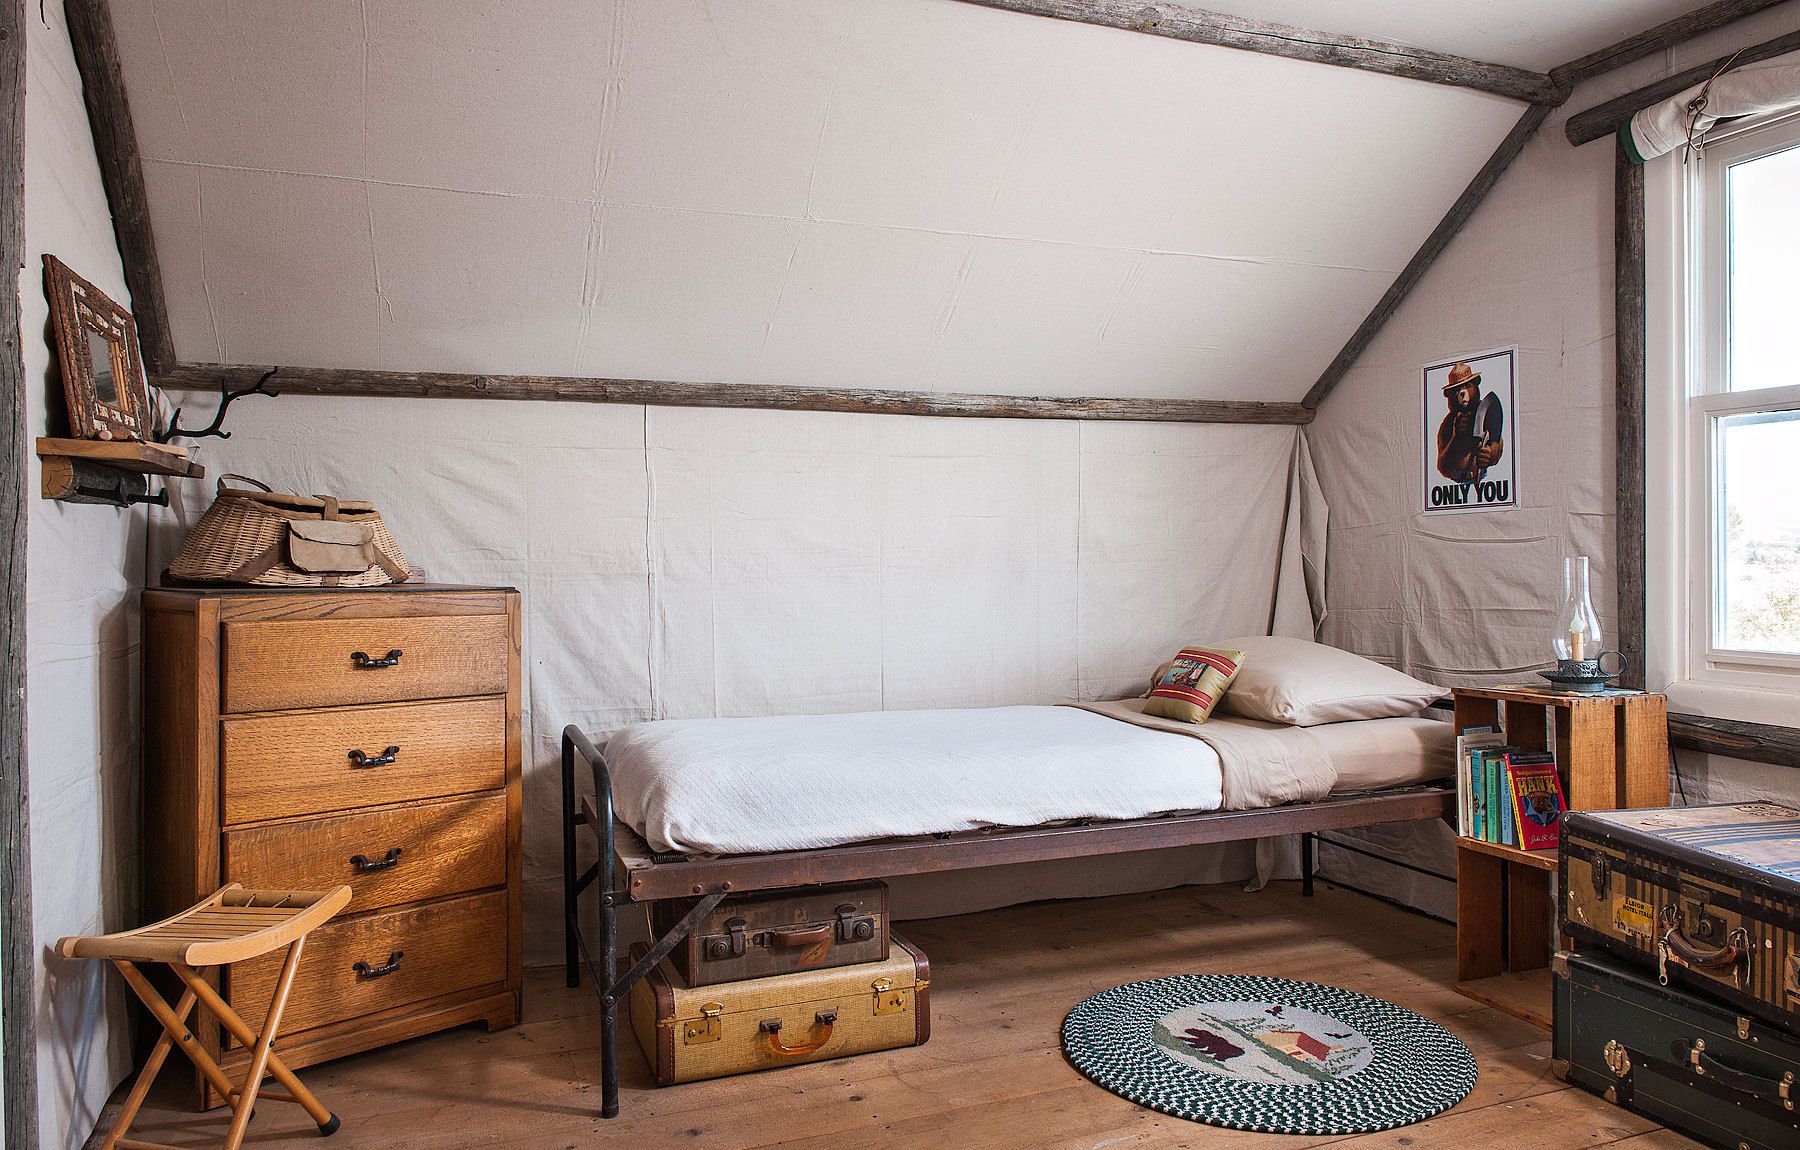 Interior Tent Camping